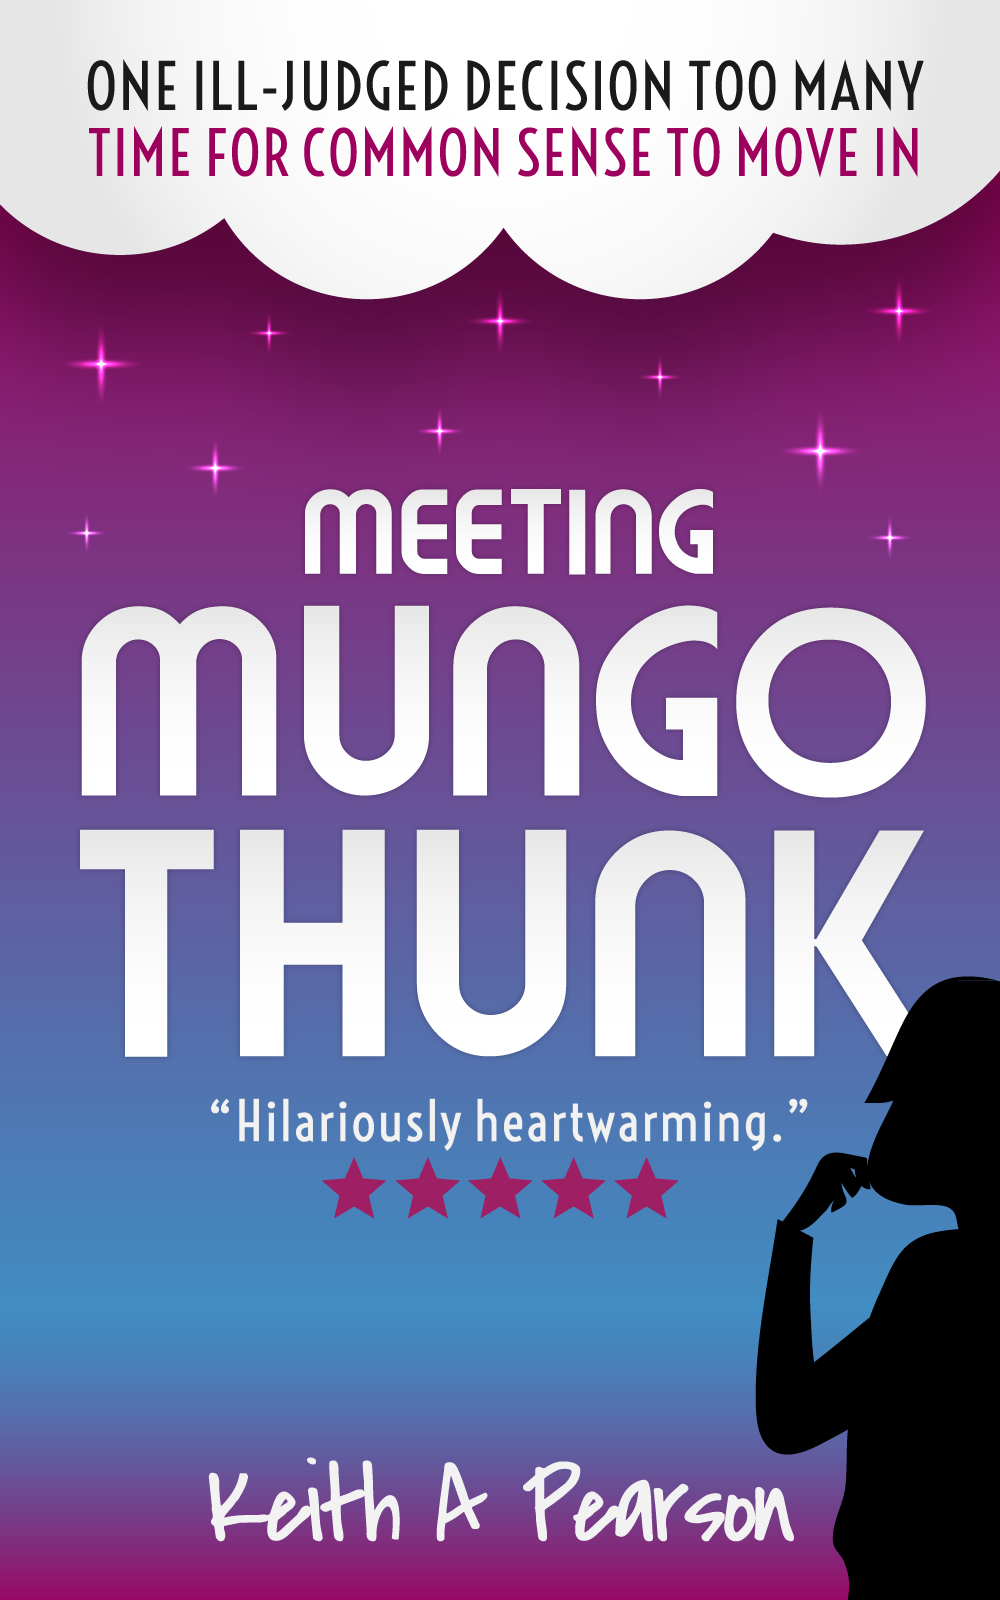 Keith A. Pearson - Meeting Mungo Thunk Book